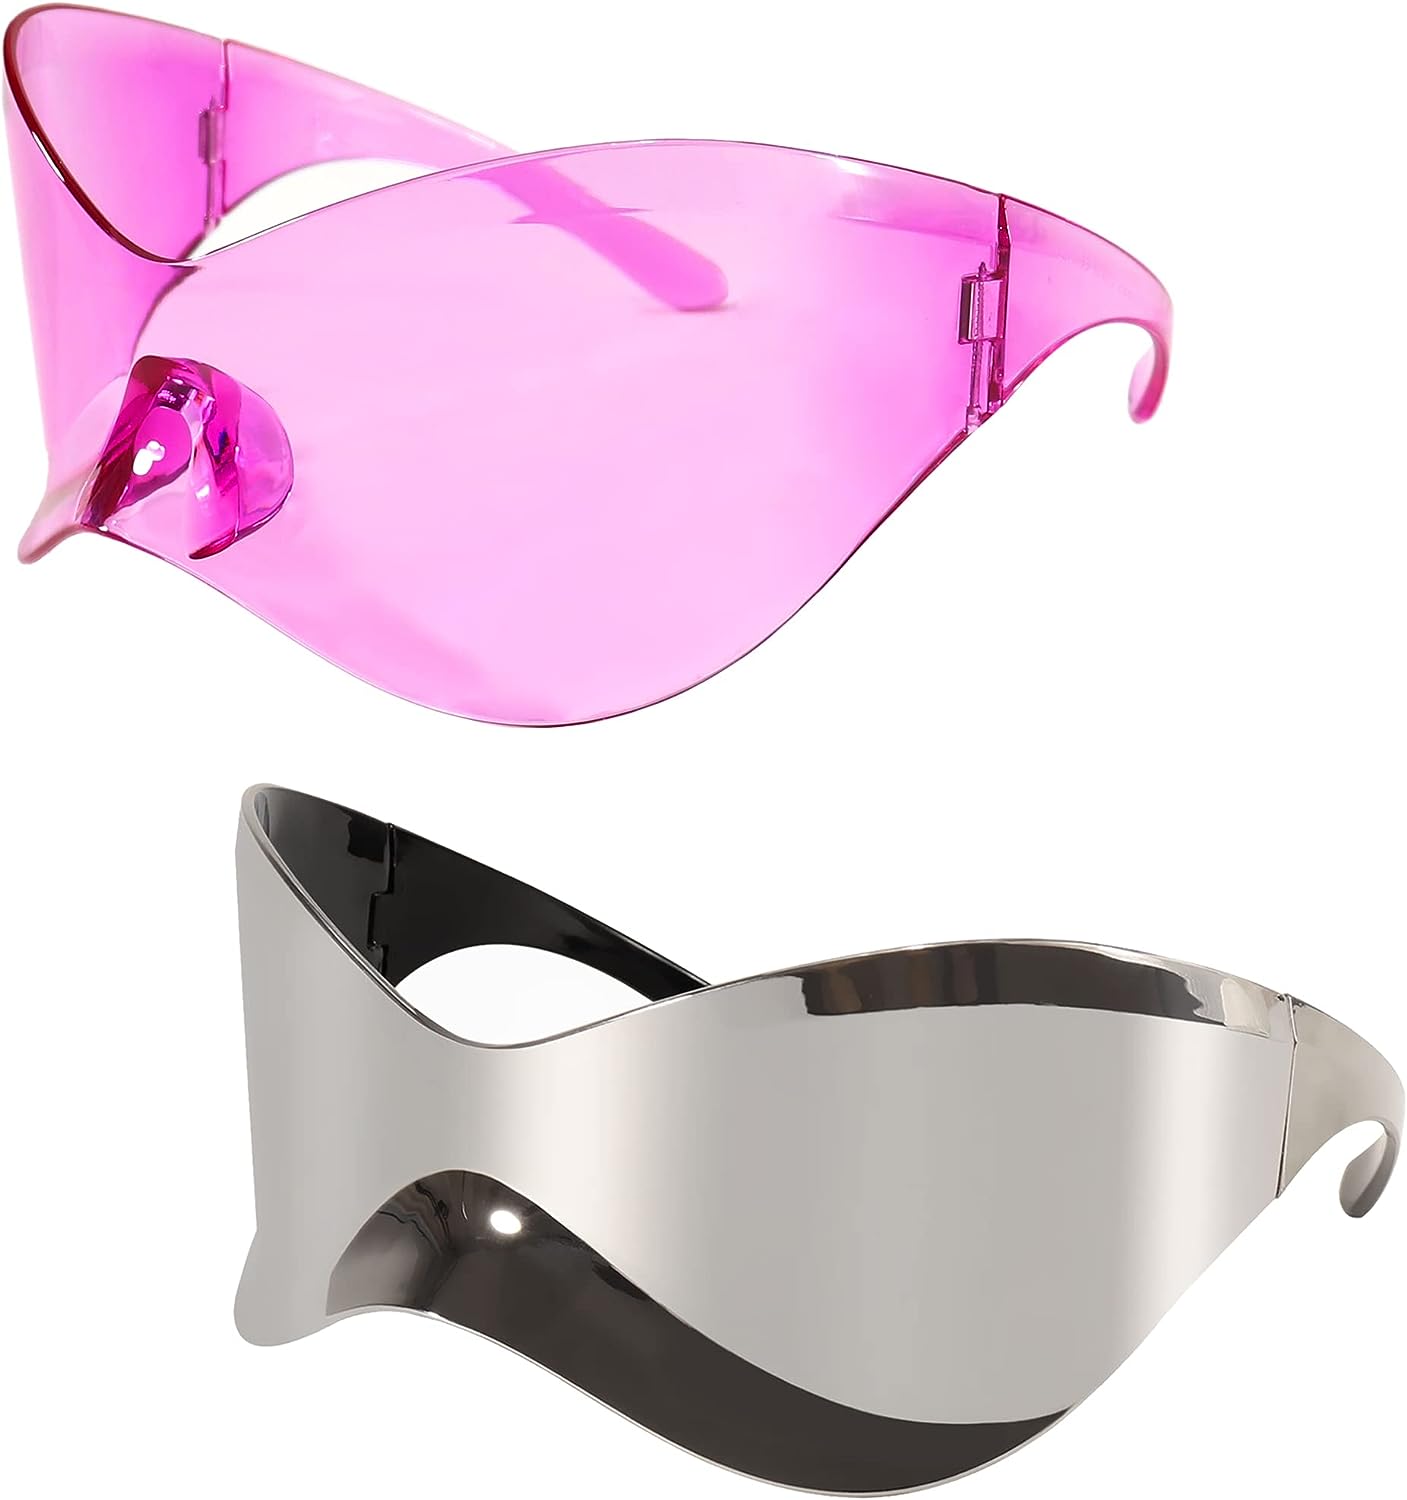 MS.ING Oversized Futuristic Sunglasses Fashion Alien Shield Wrap